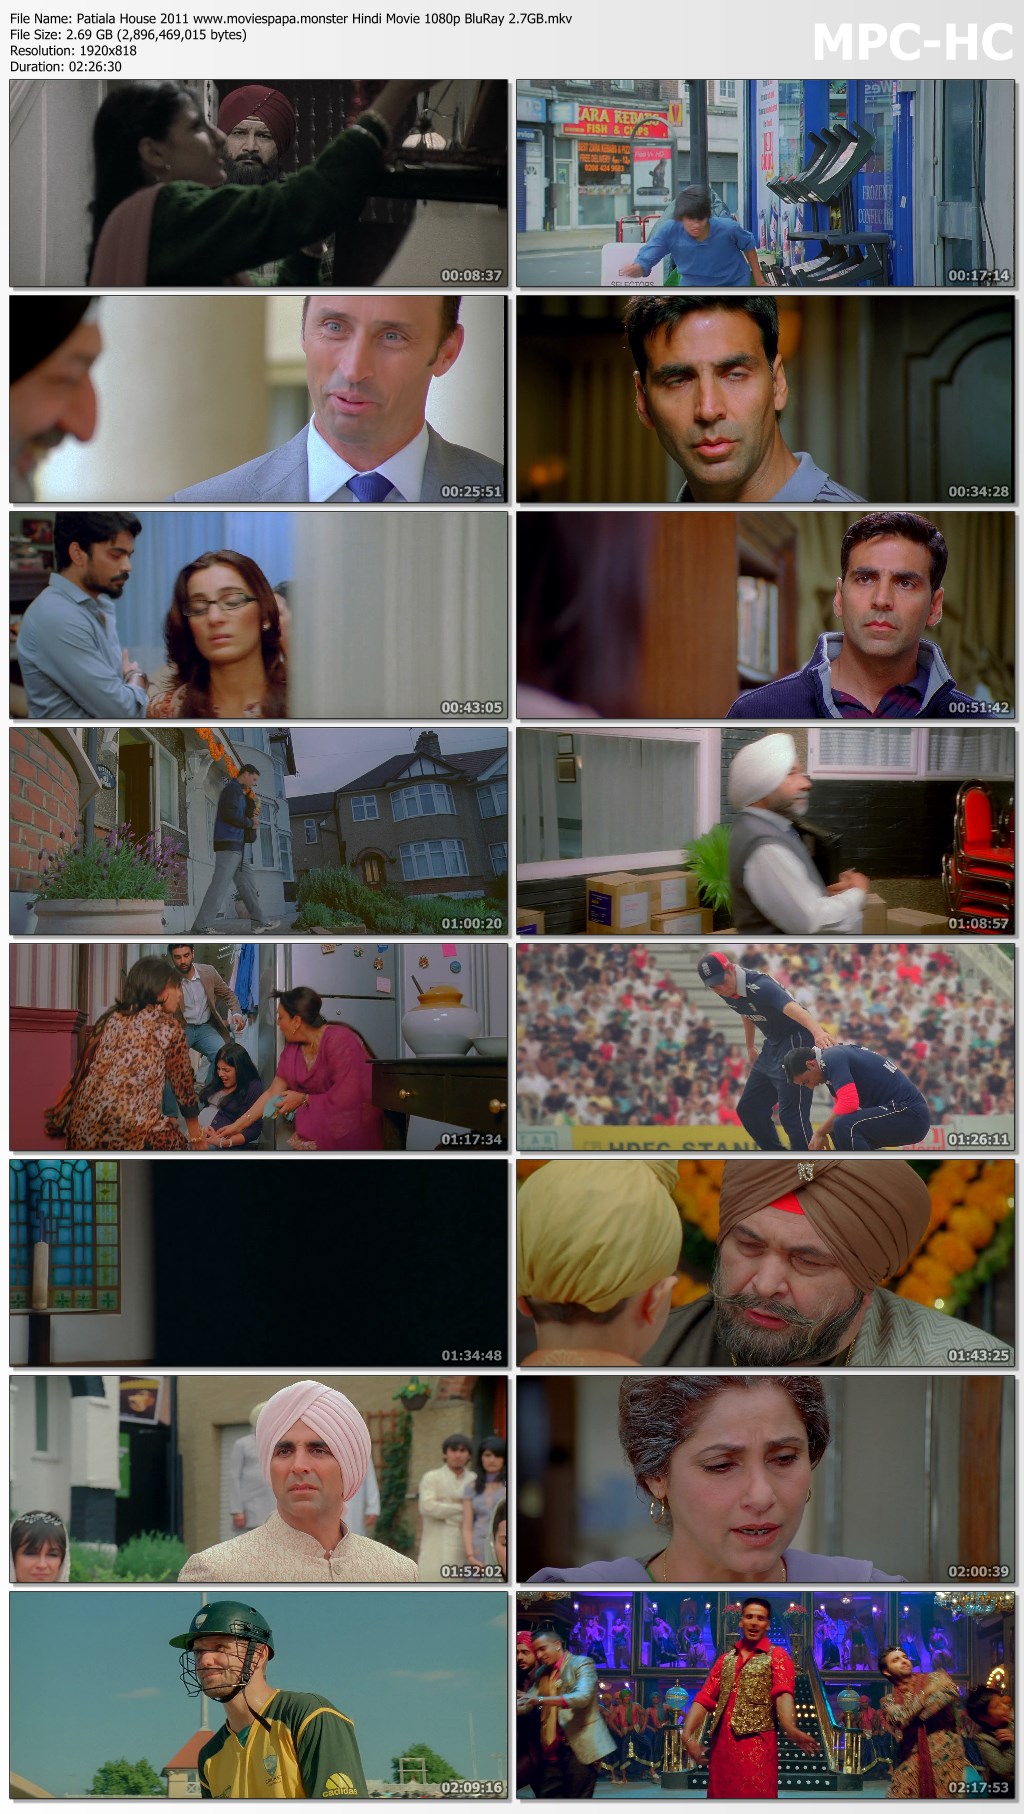 Patiala House 2011 Hindi Movie 1080p | 720p | 480p BluRay Download